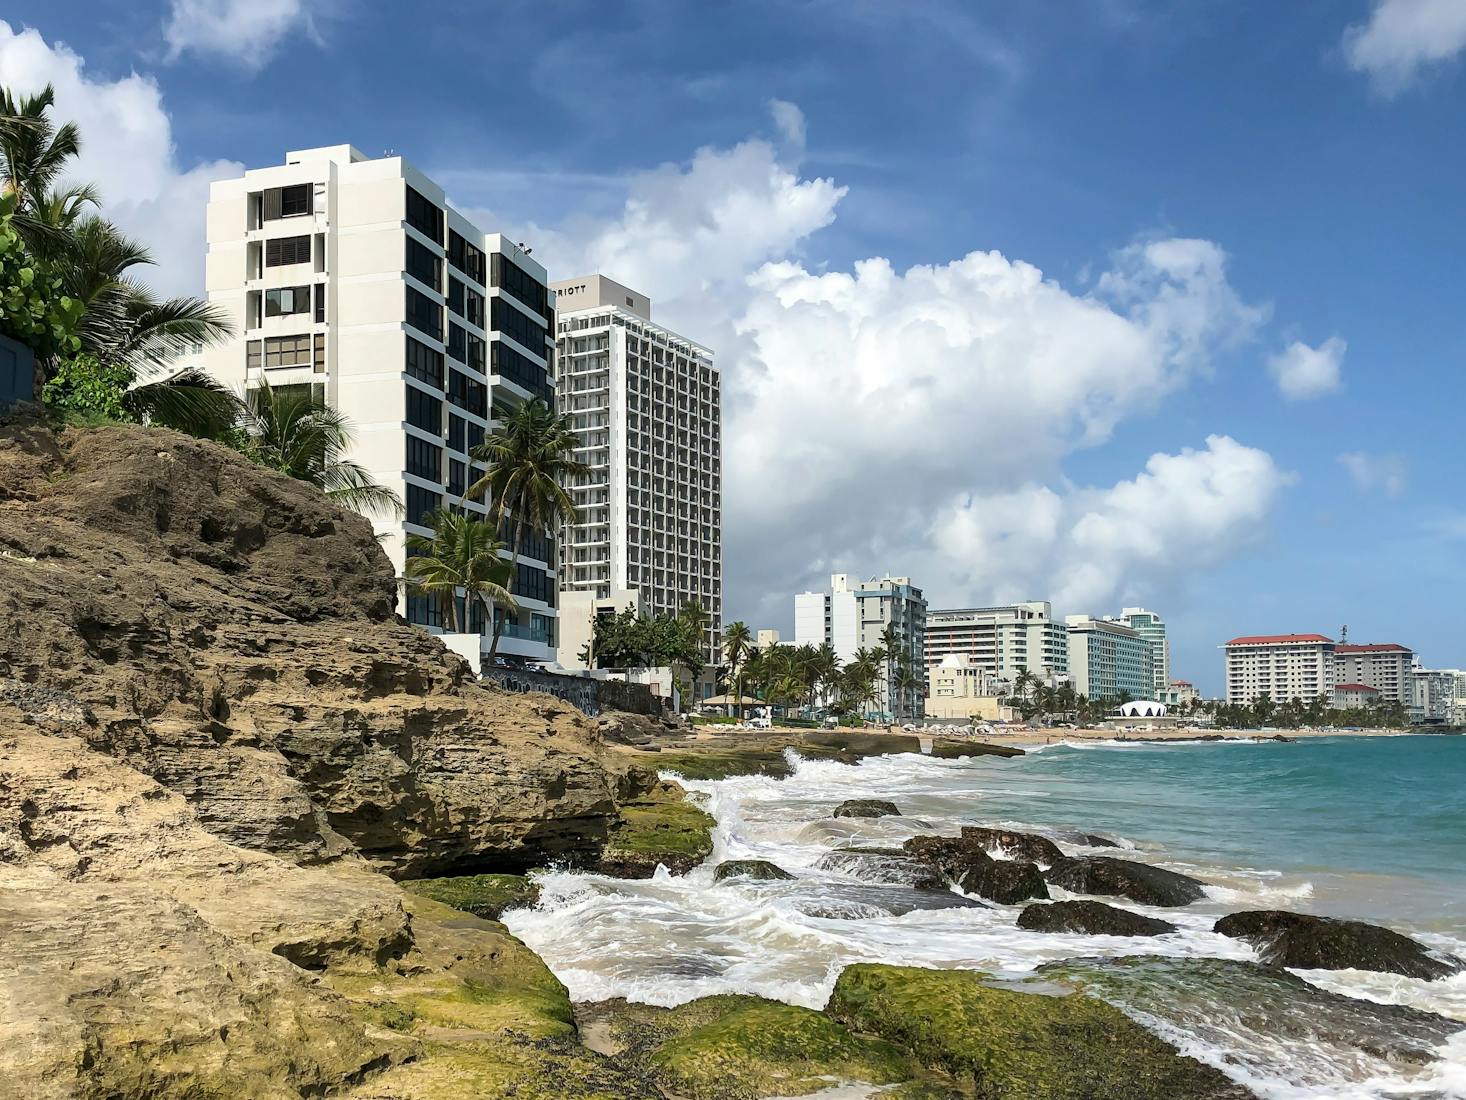 Beach in San Juan, Puerto Rico